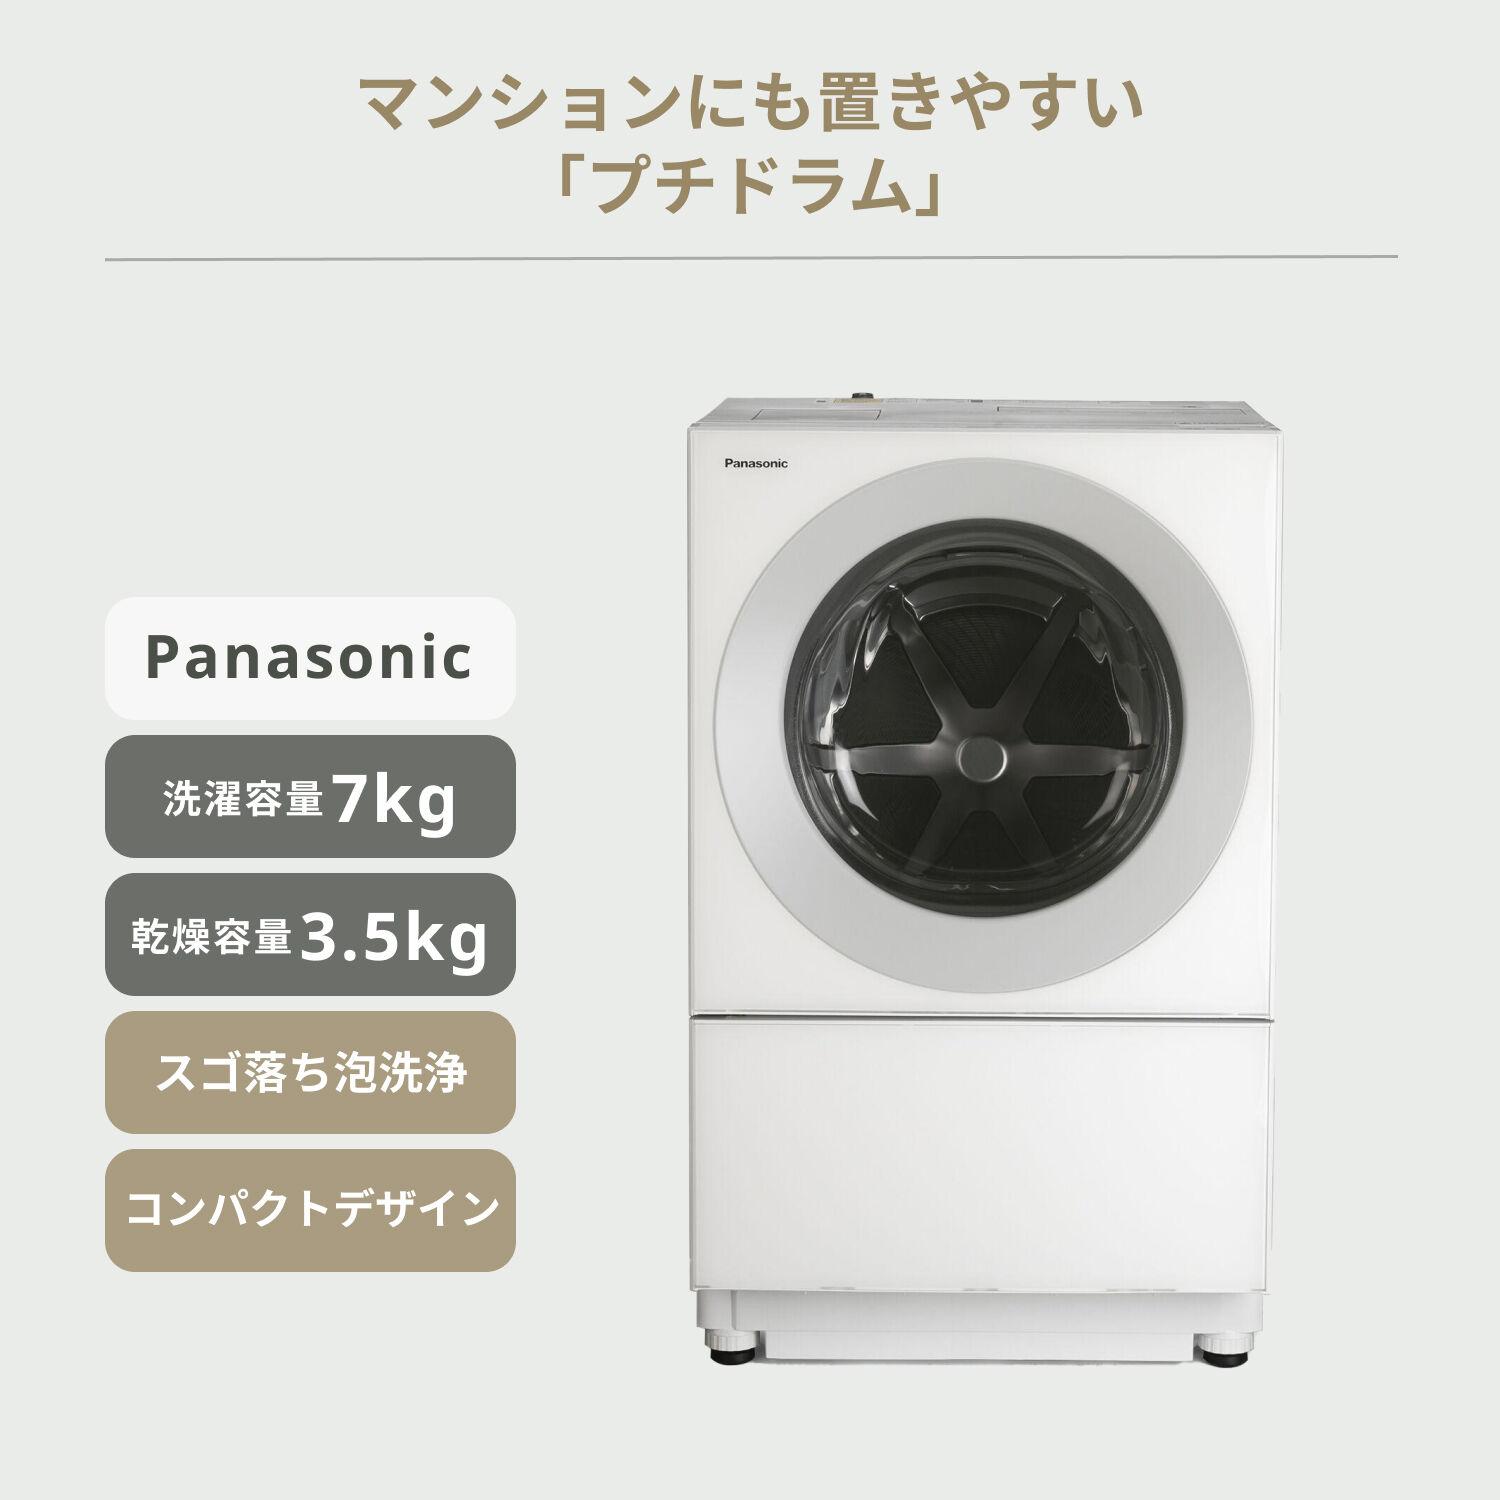 Panasonic Cuble ドラム洗濯乾燥機 NA_VG710L - 生活家電